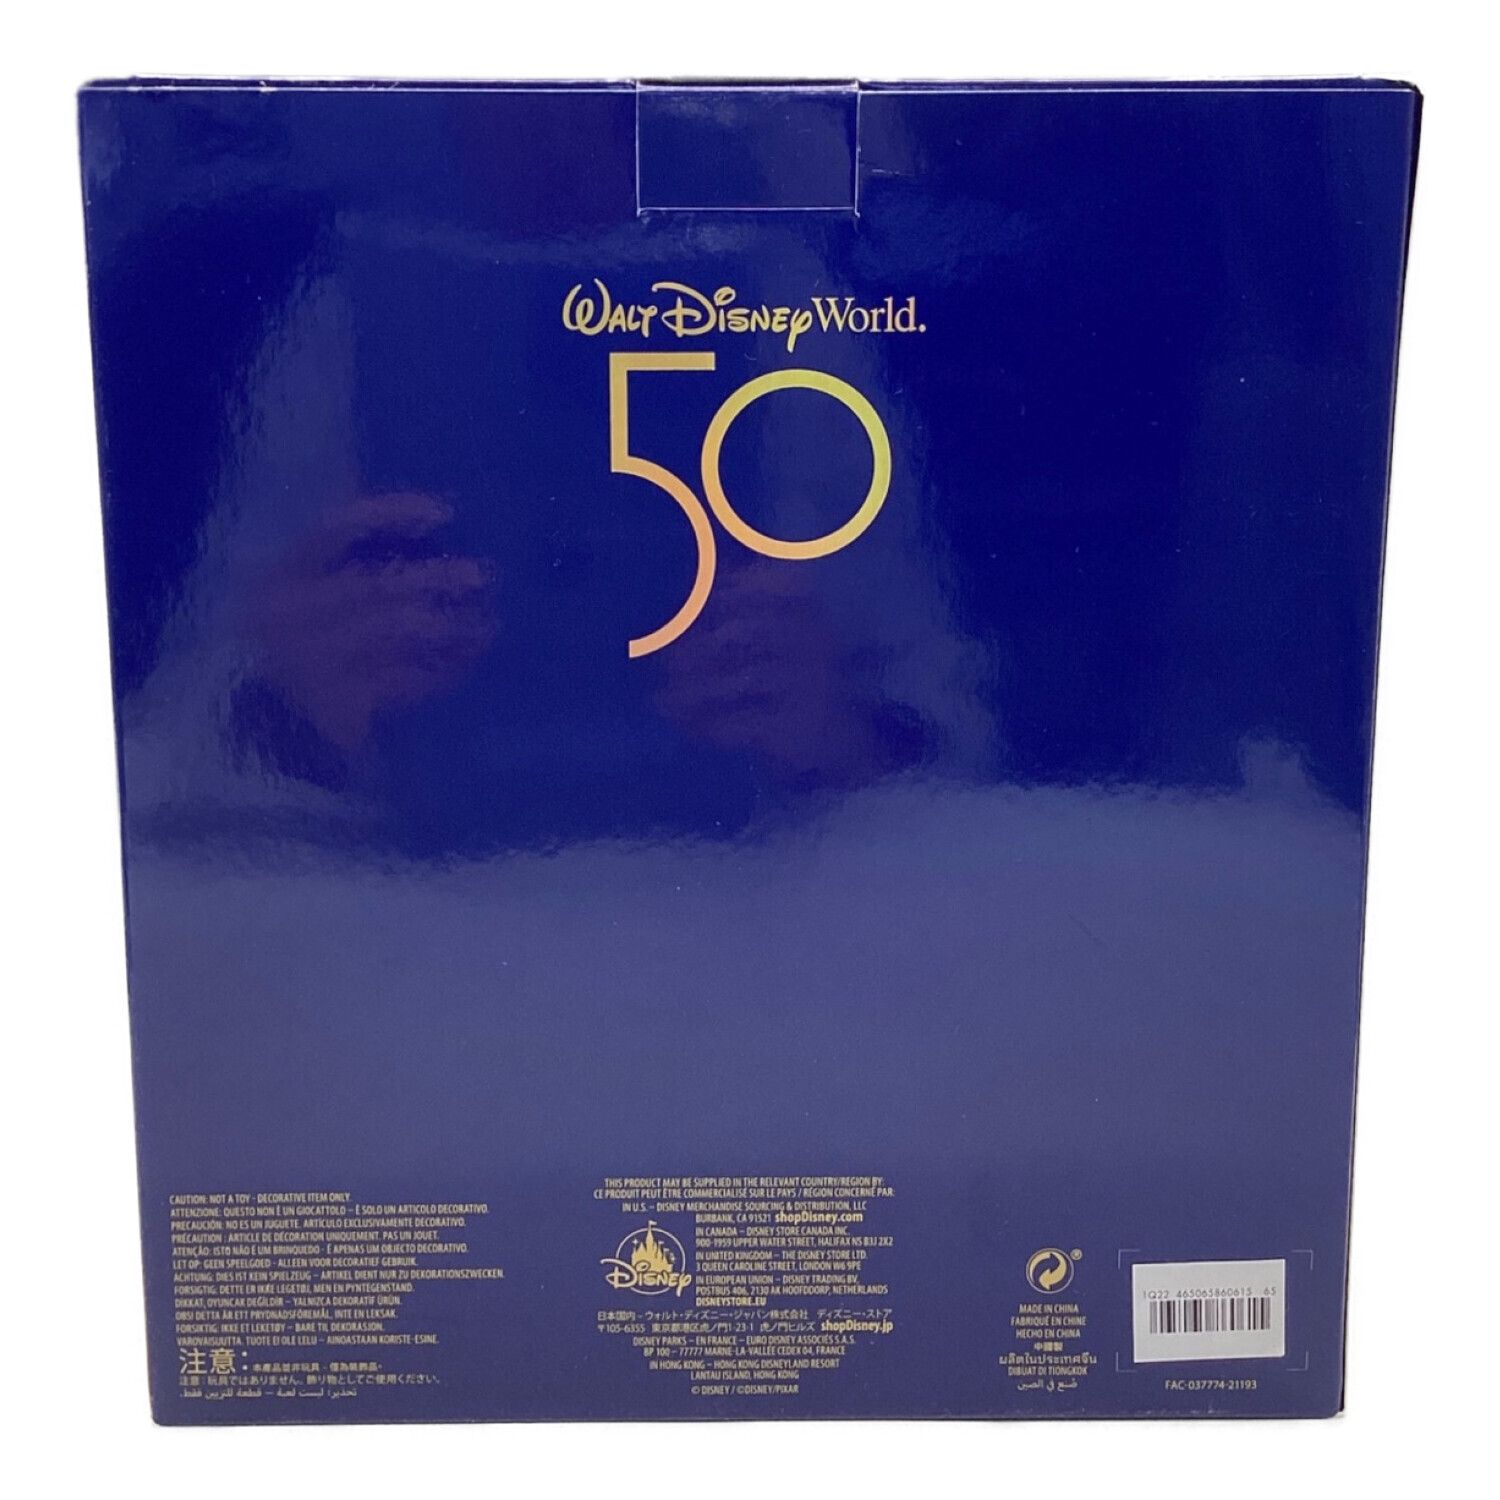 Walt Disney World (ウォルトディズニーワールド) フィギュア 50周年